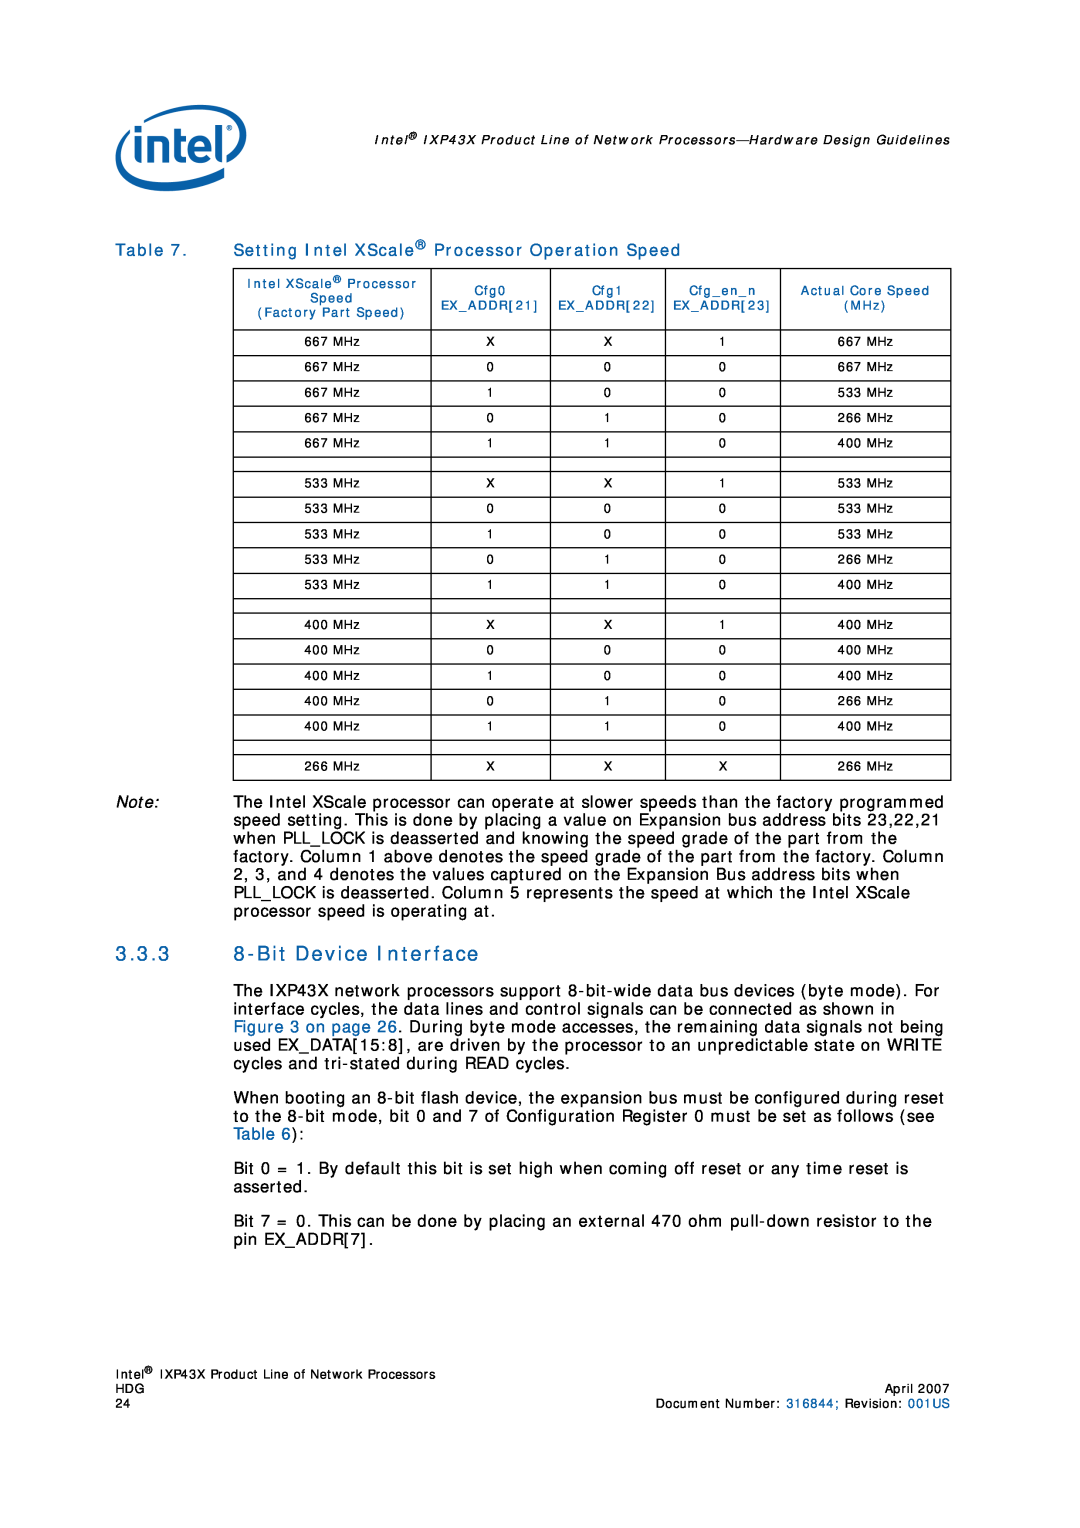 Intel IXP43X manual 3.3.3 8-Bit Device Interface, Setting Intel XScale Processor Operation Speed 